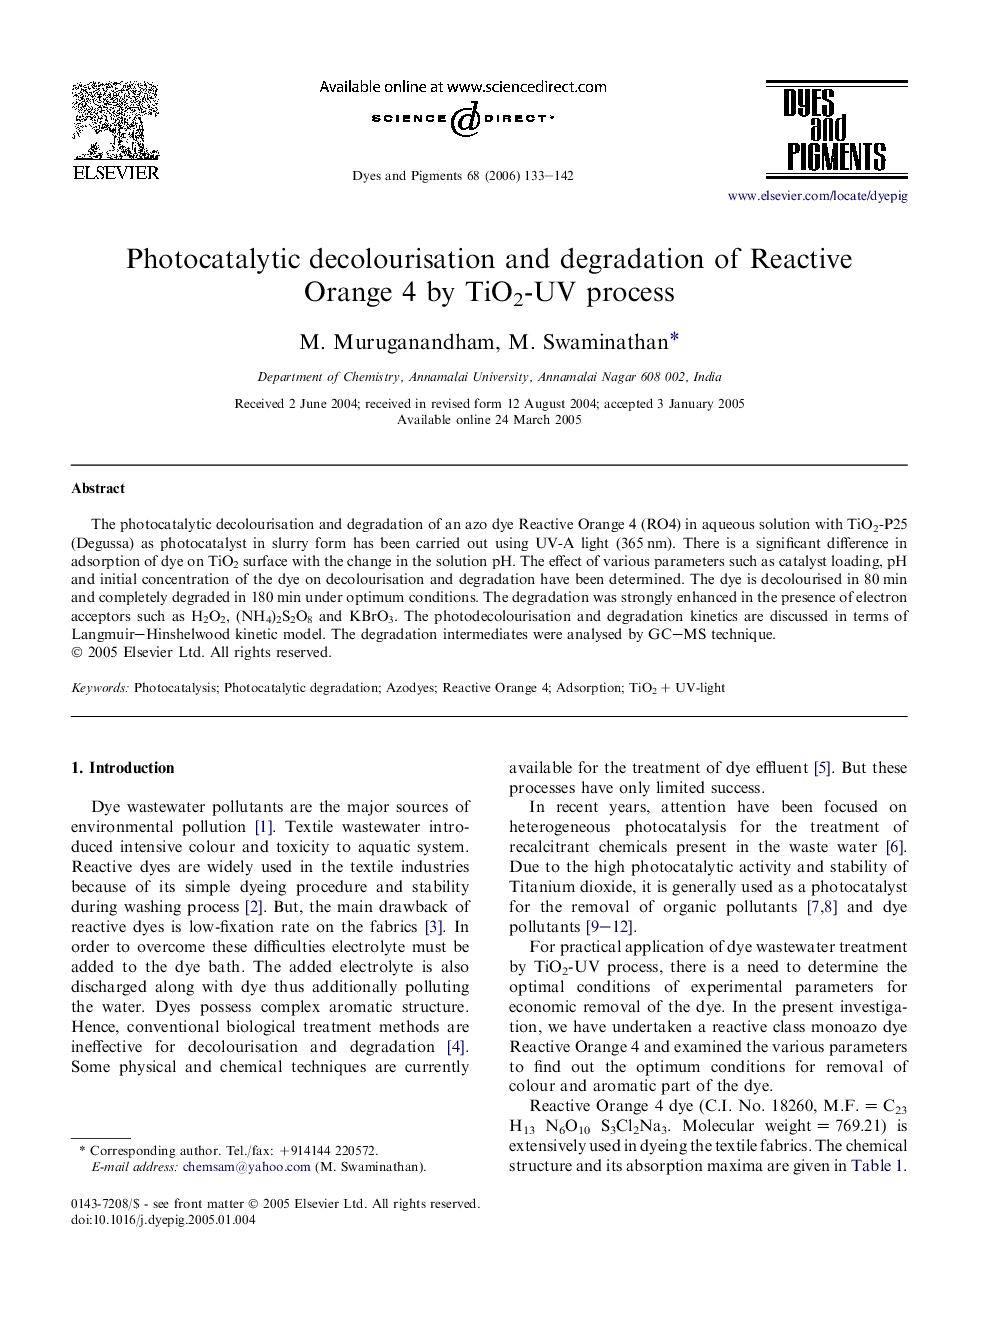 Photocatalytic decolourisation and degradation of Reactive Orange 4 by TiO2-UV process